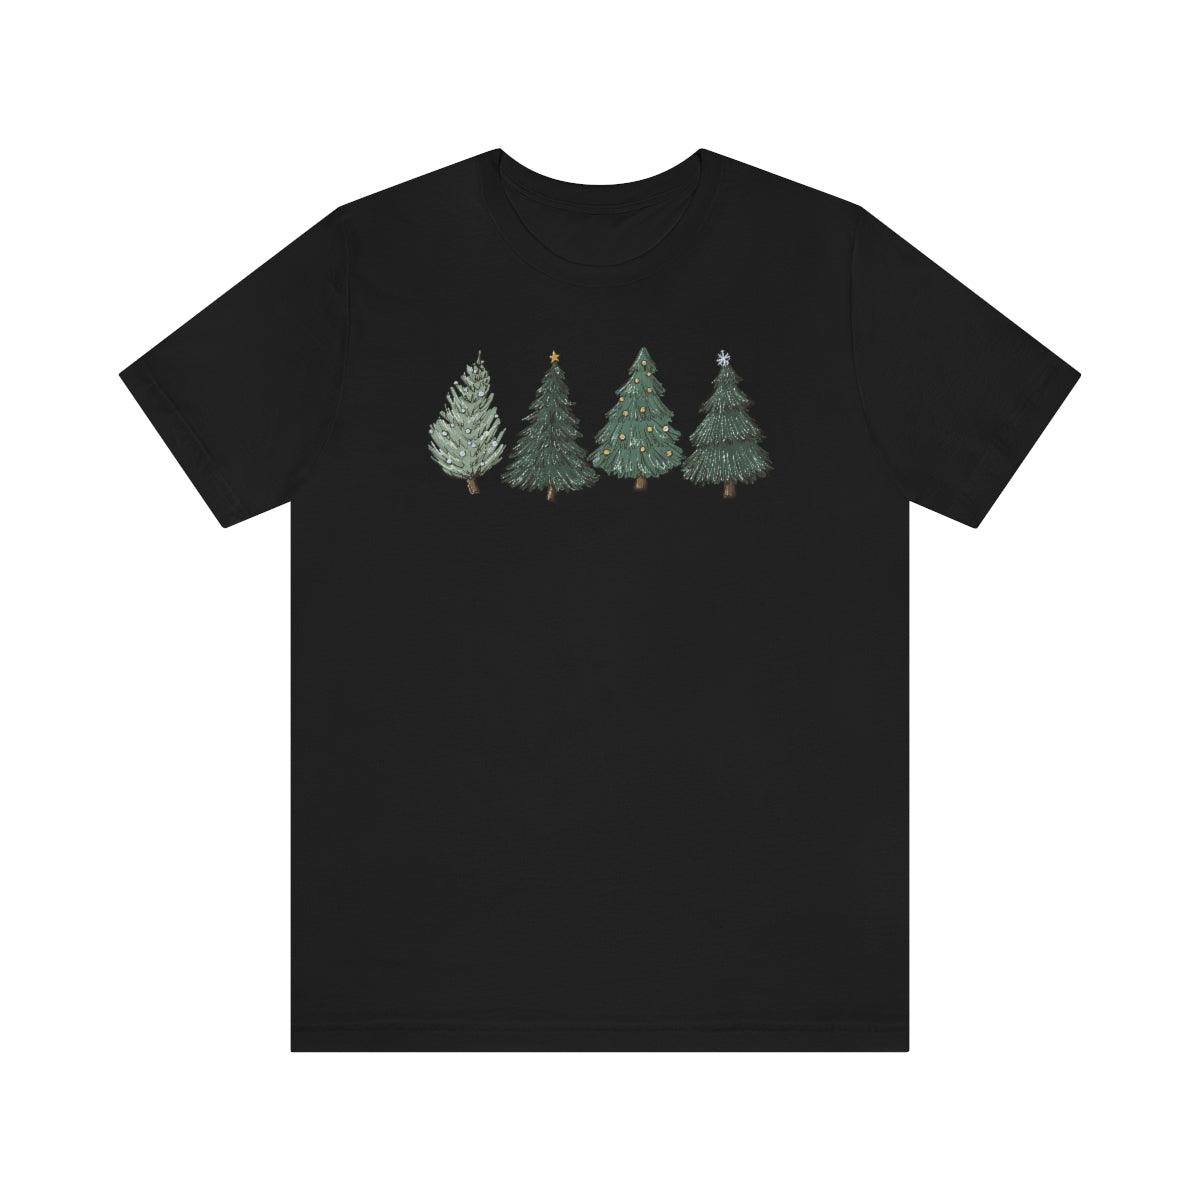 Christmas Trees Holiday Christmas Shirt Short Sleeve Tee - Crystal Rose Design Co.